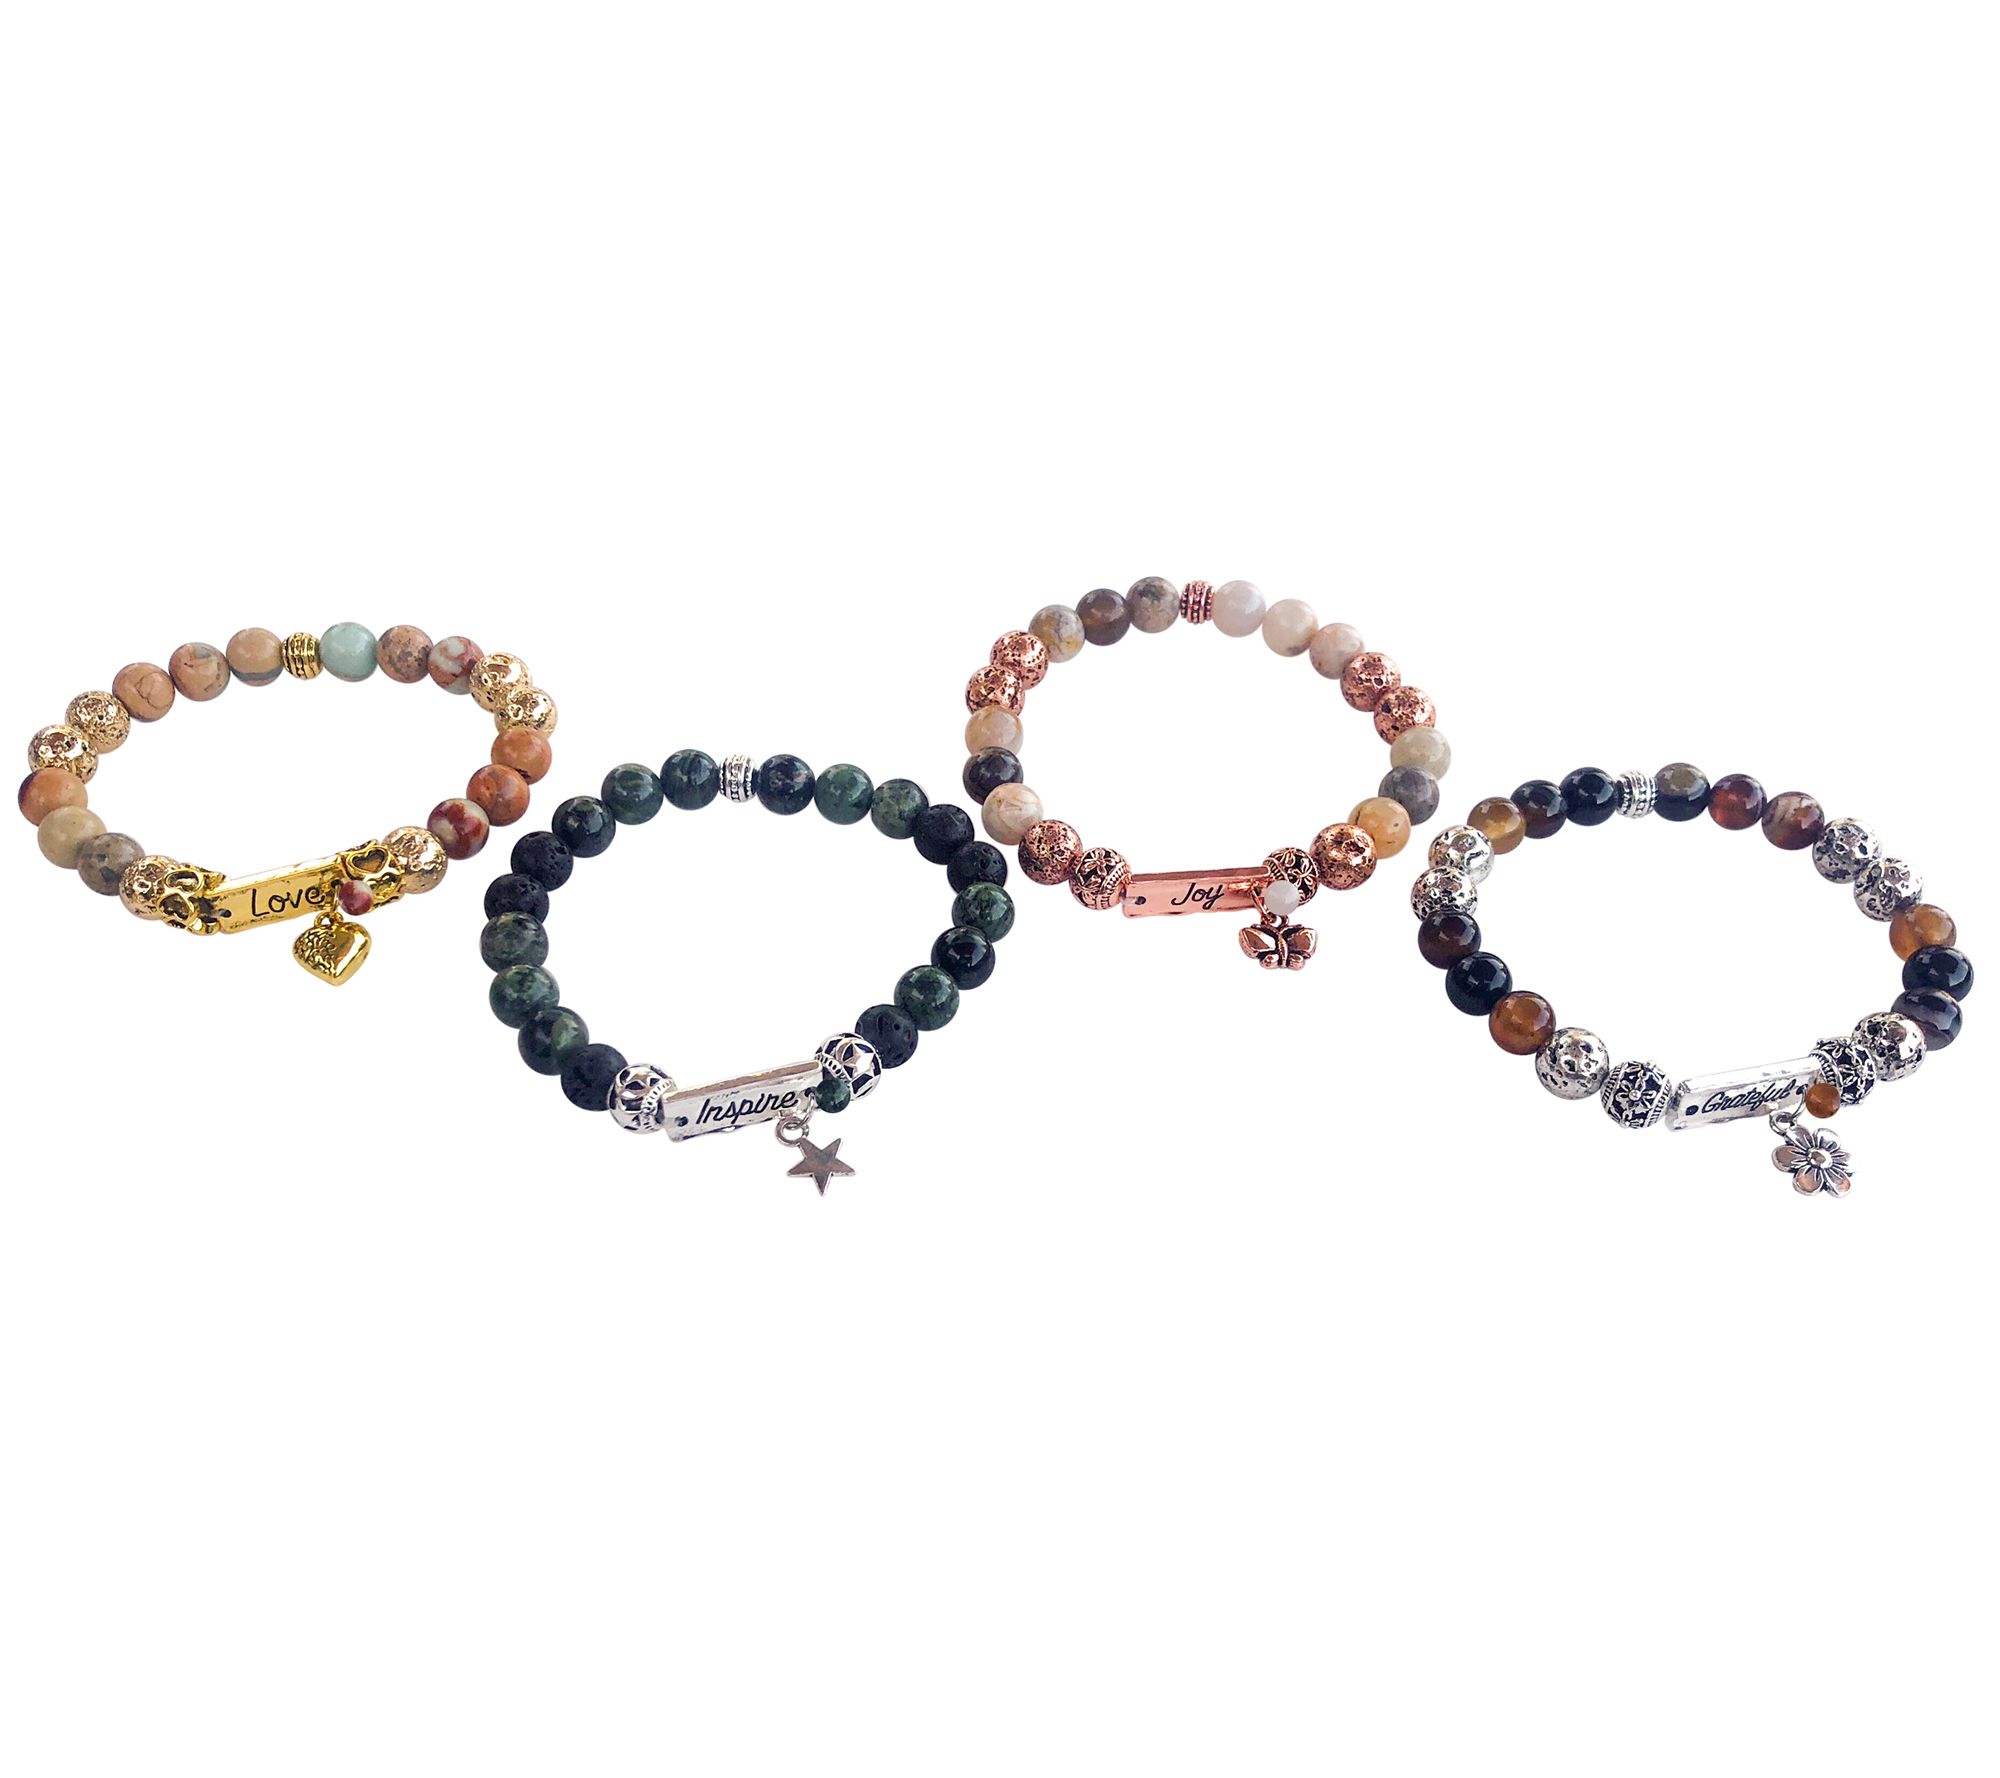 Set of 4 Lava Bead Bracelets w/Inspirational Word Bar Charm in Bag